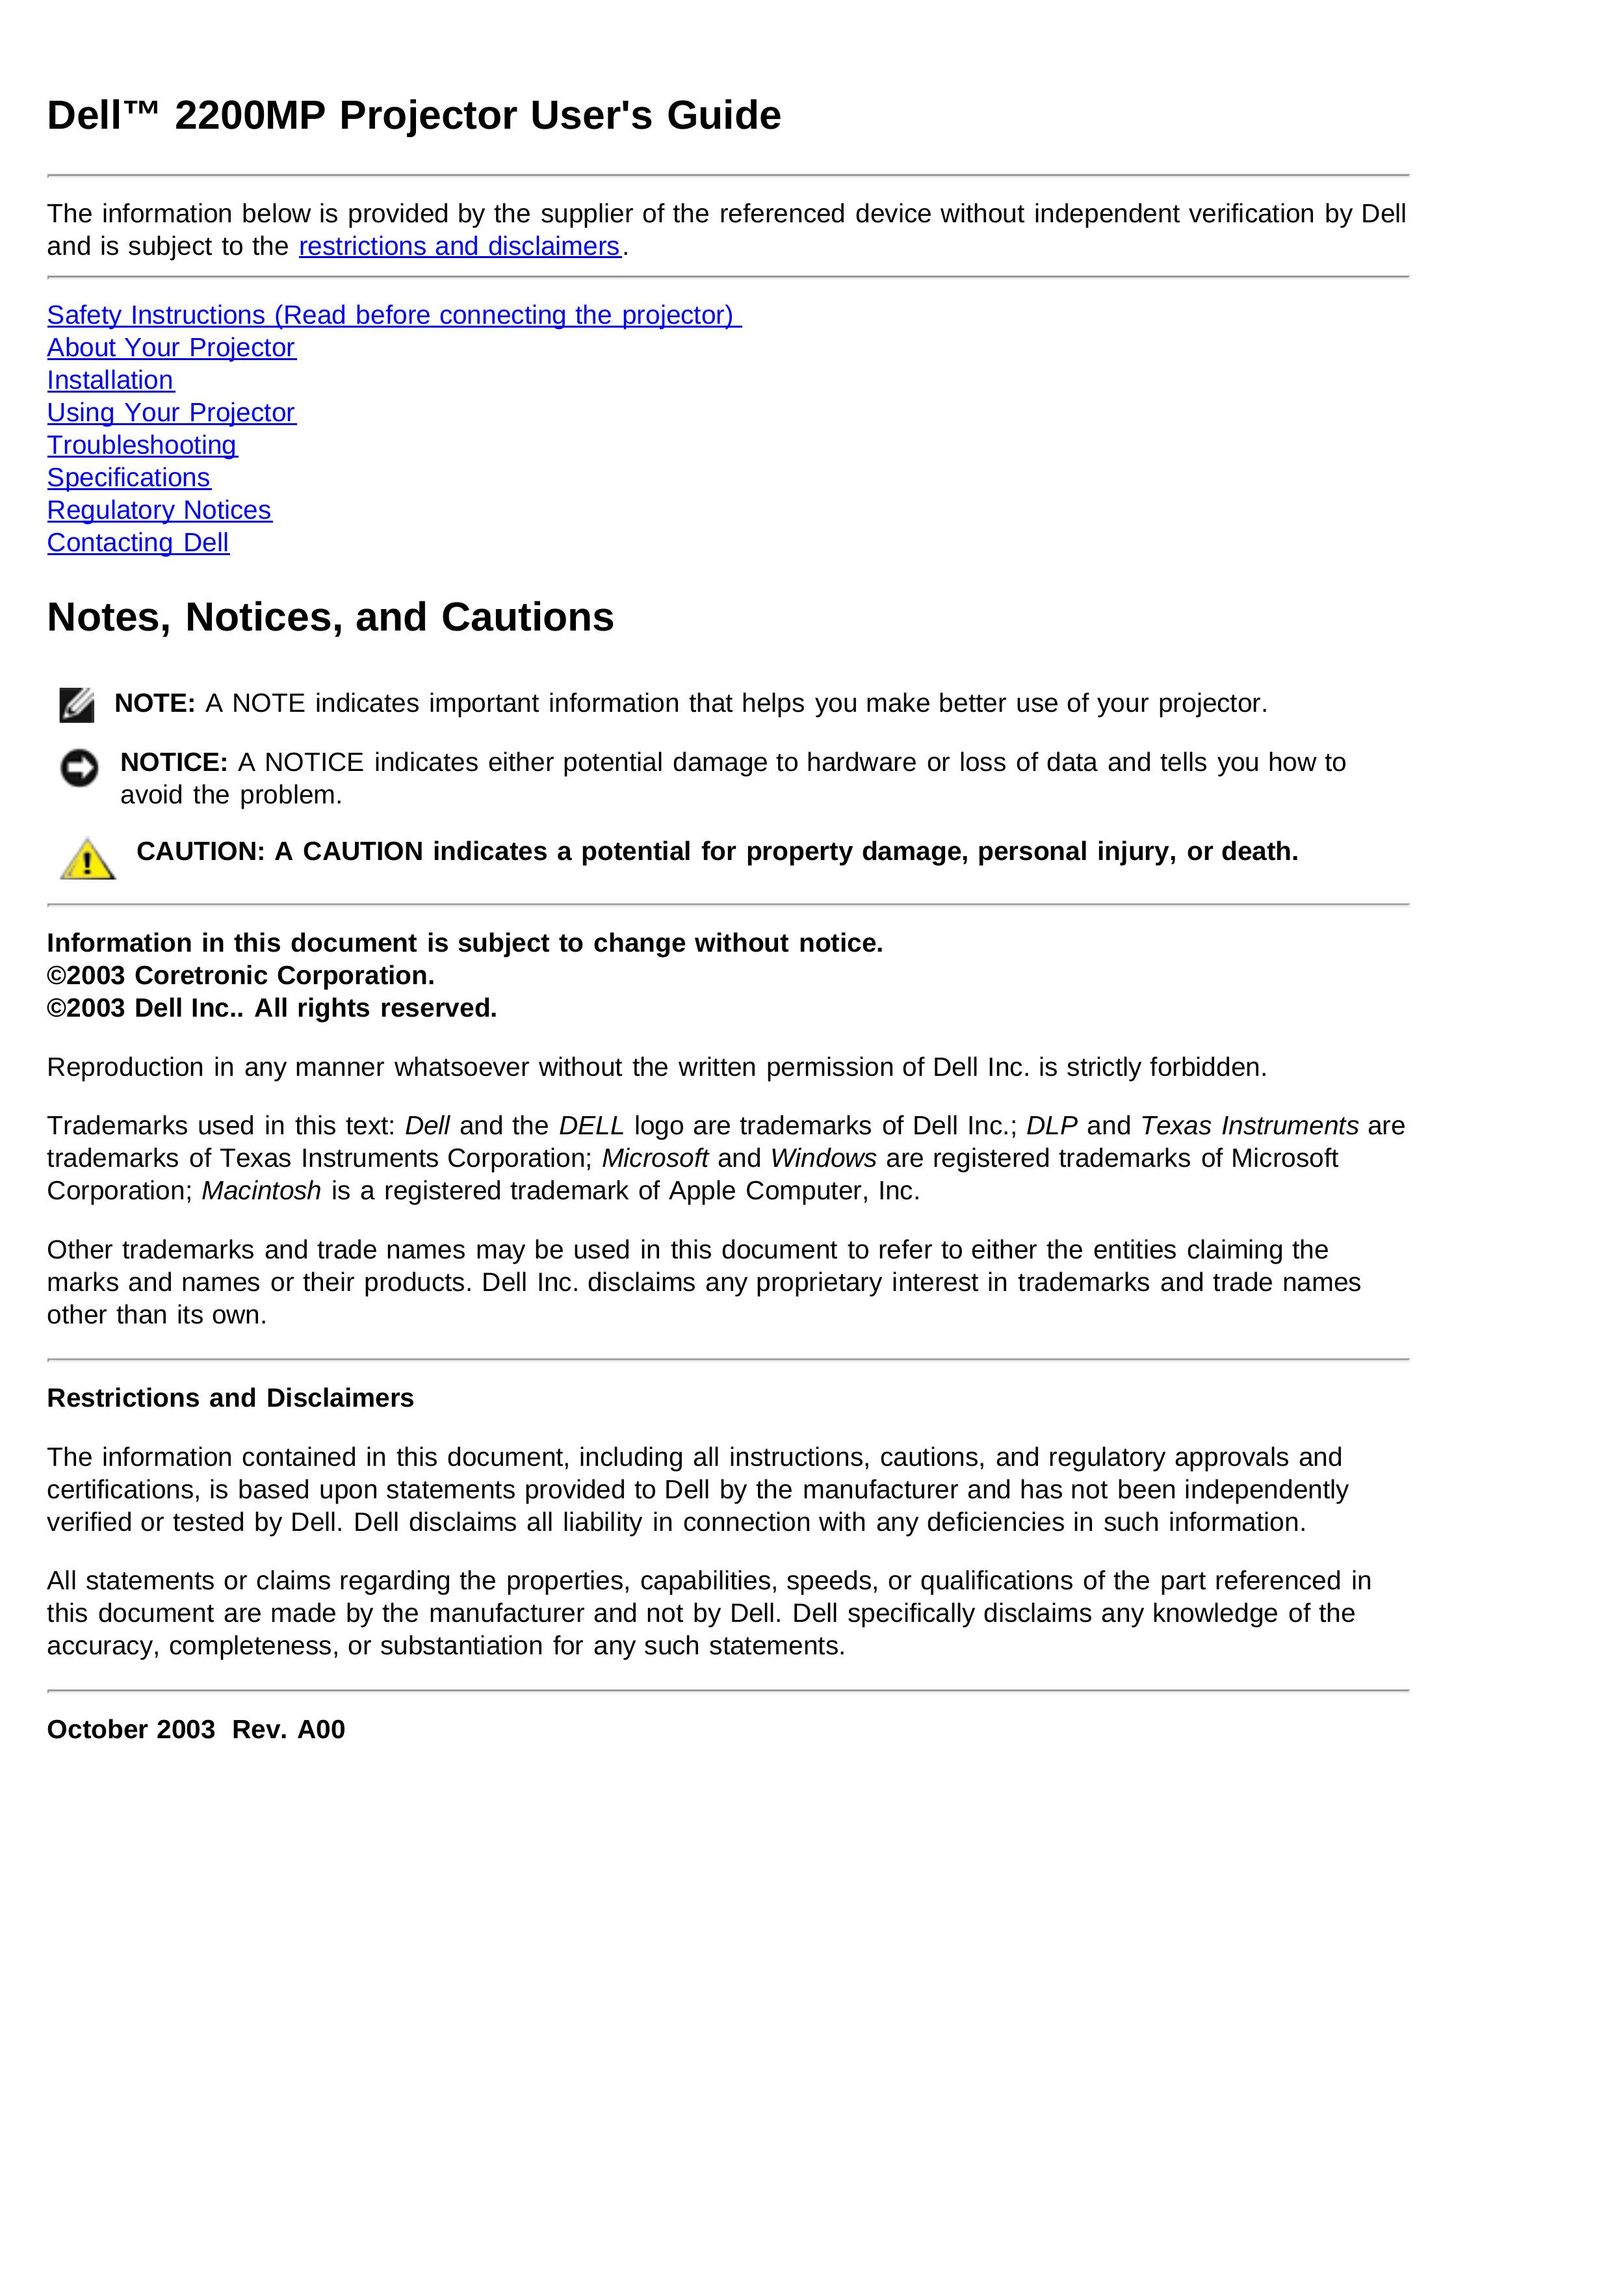 Dell 2200MP Projector User Manual